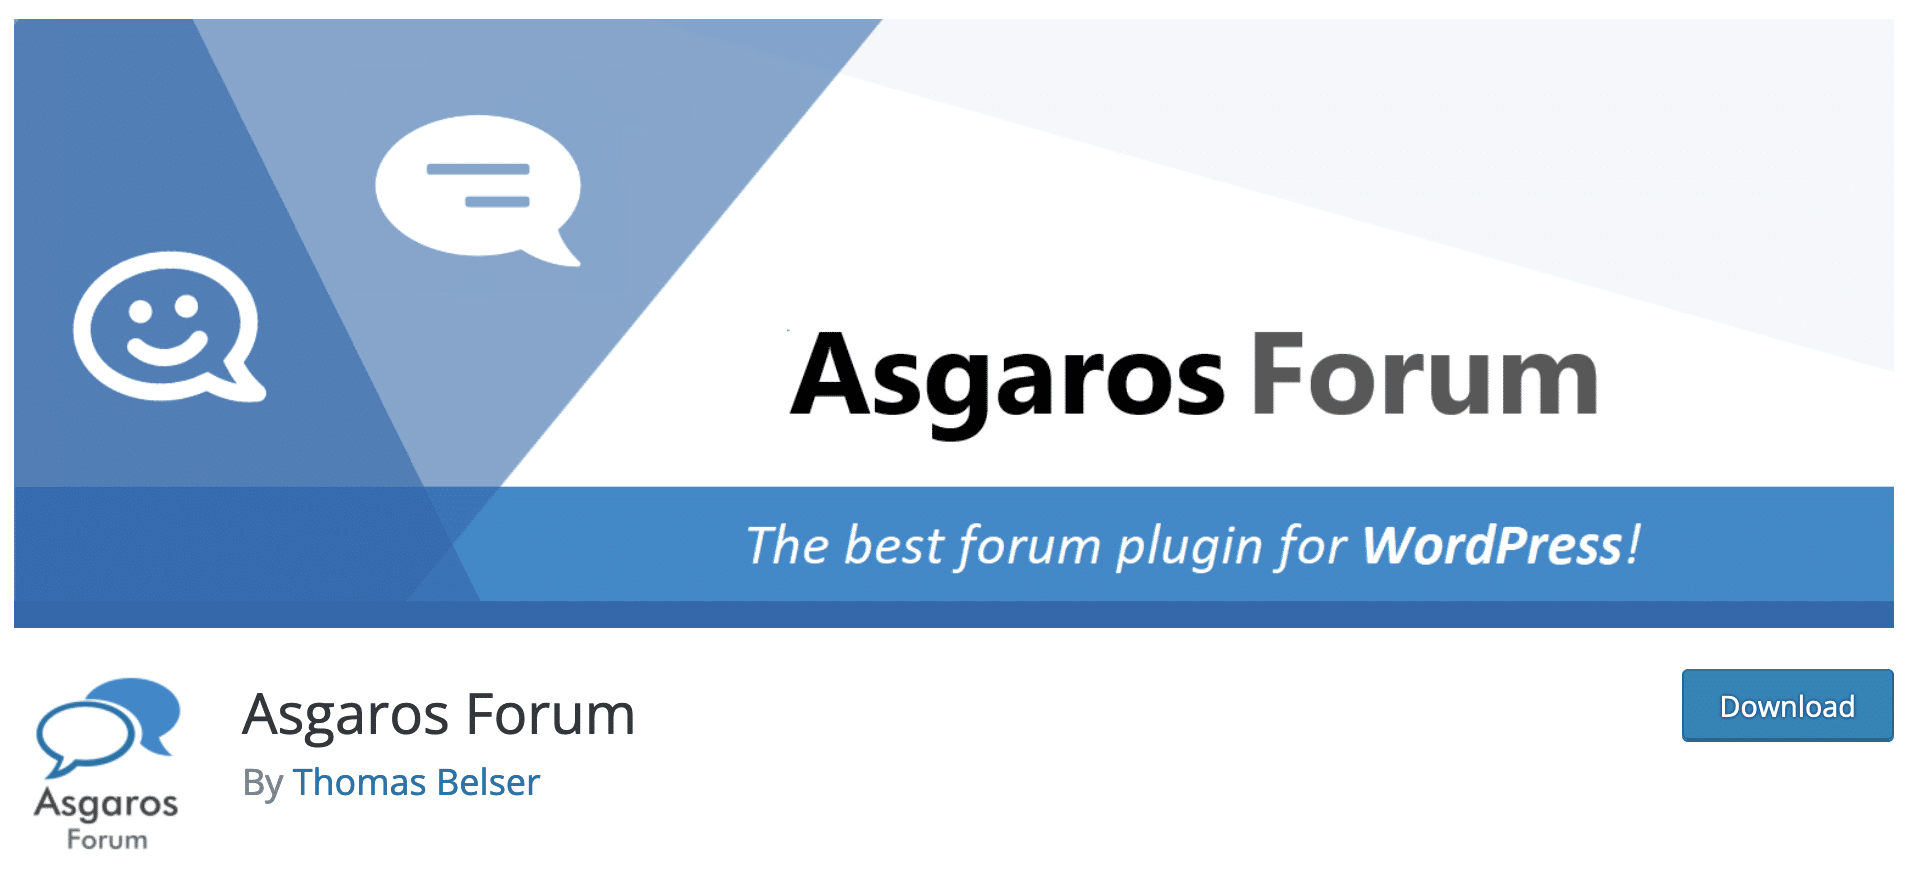 Asgaros Forum download page.